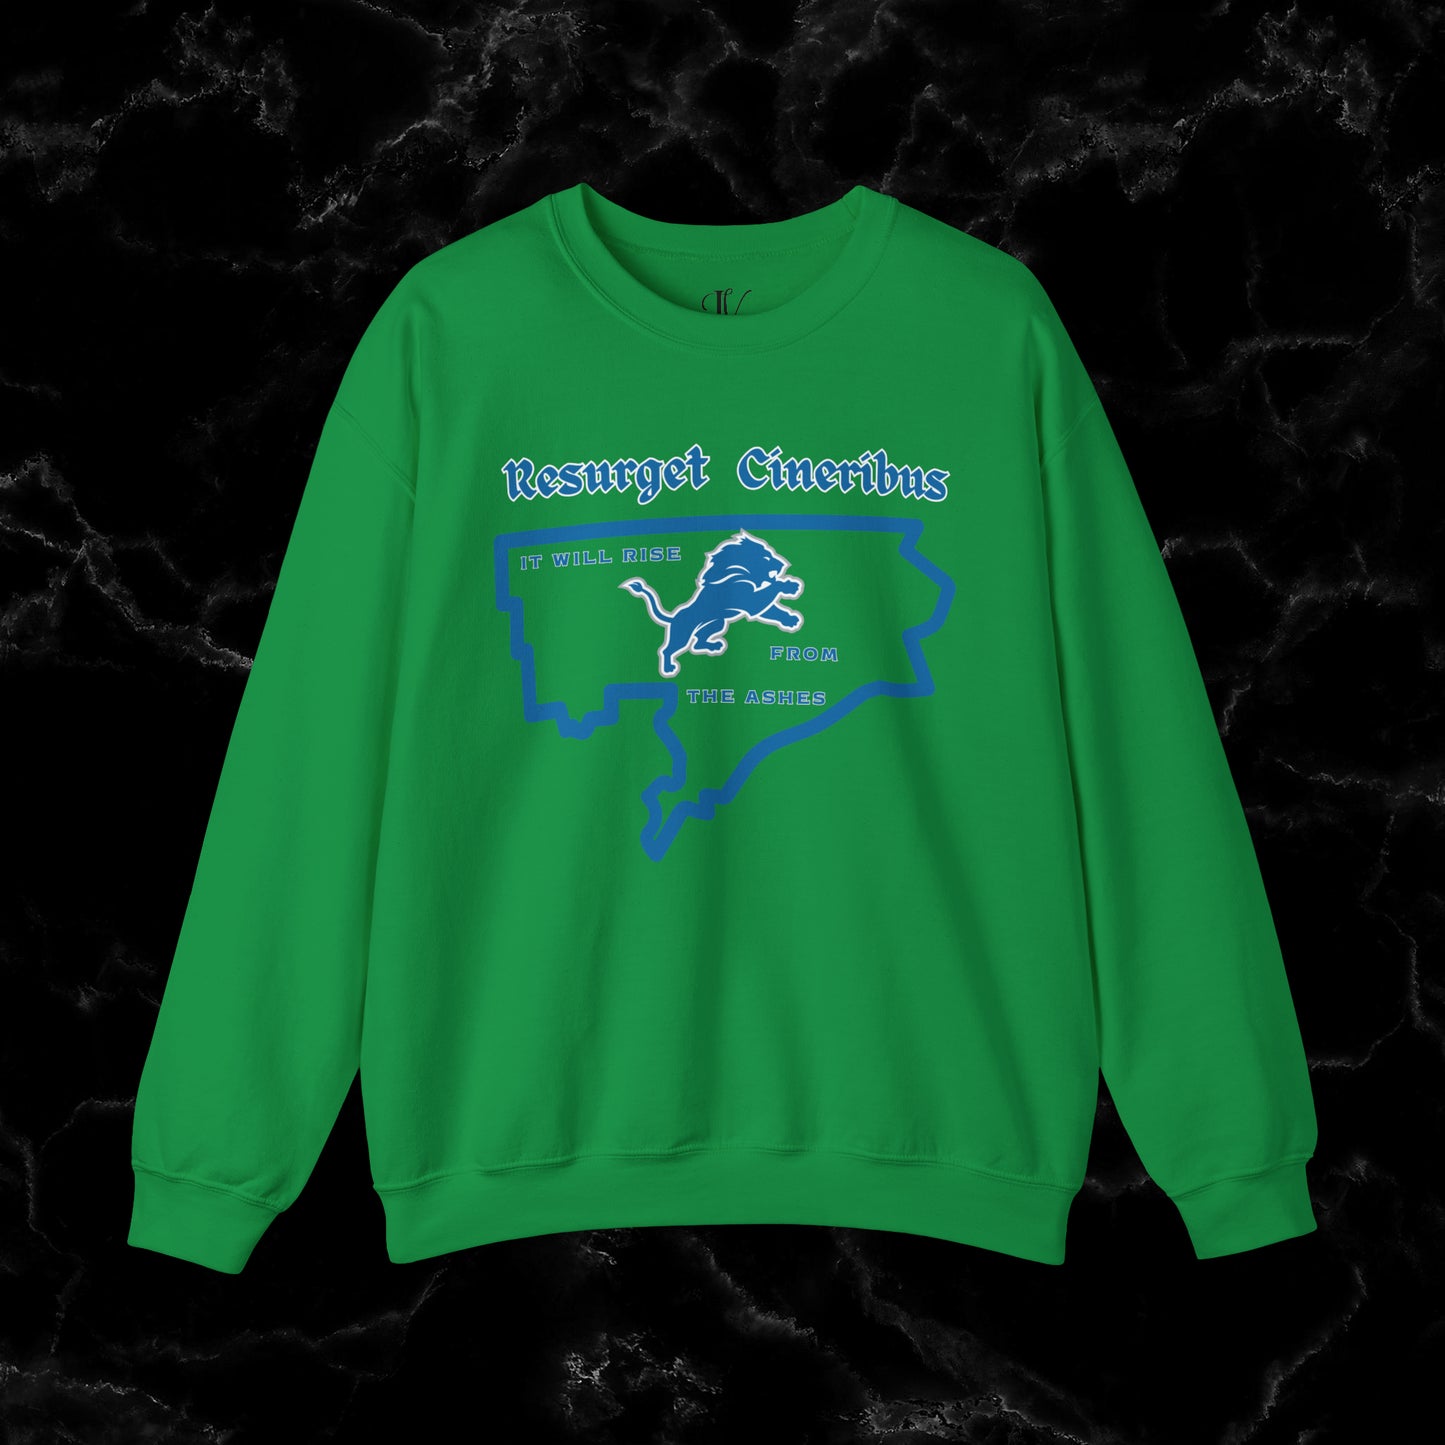 Resurget Cineribus Unisex Crewneck Sweatshirt - Latin Inspirational Gifts for Detroit Sports Football Fans Sweatshirt S Irish Green 